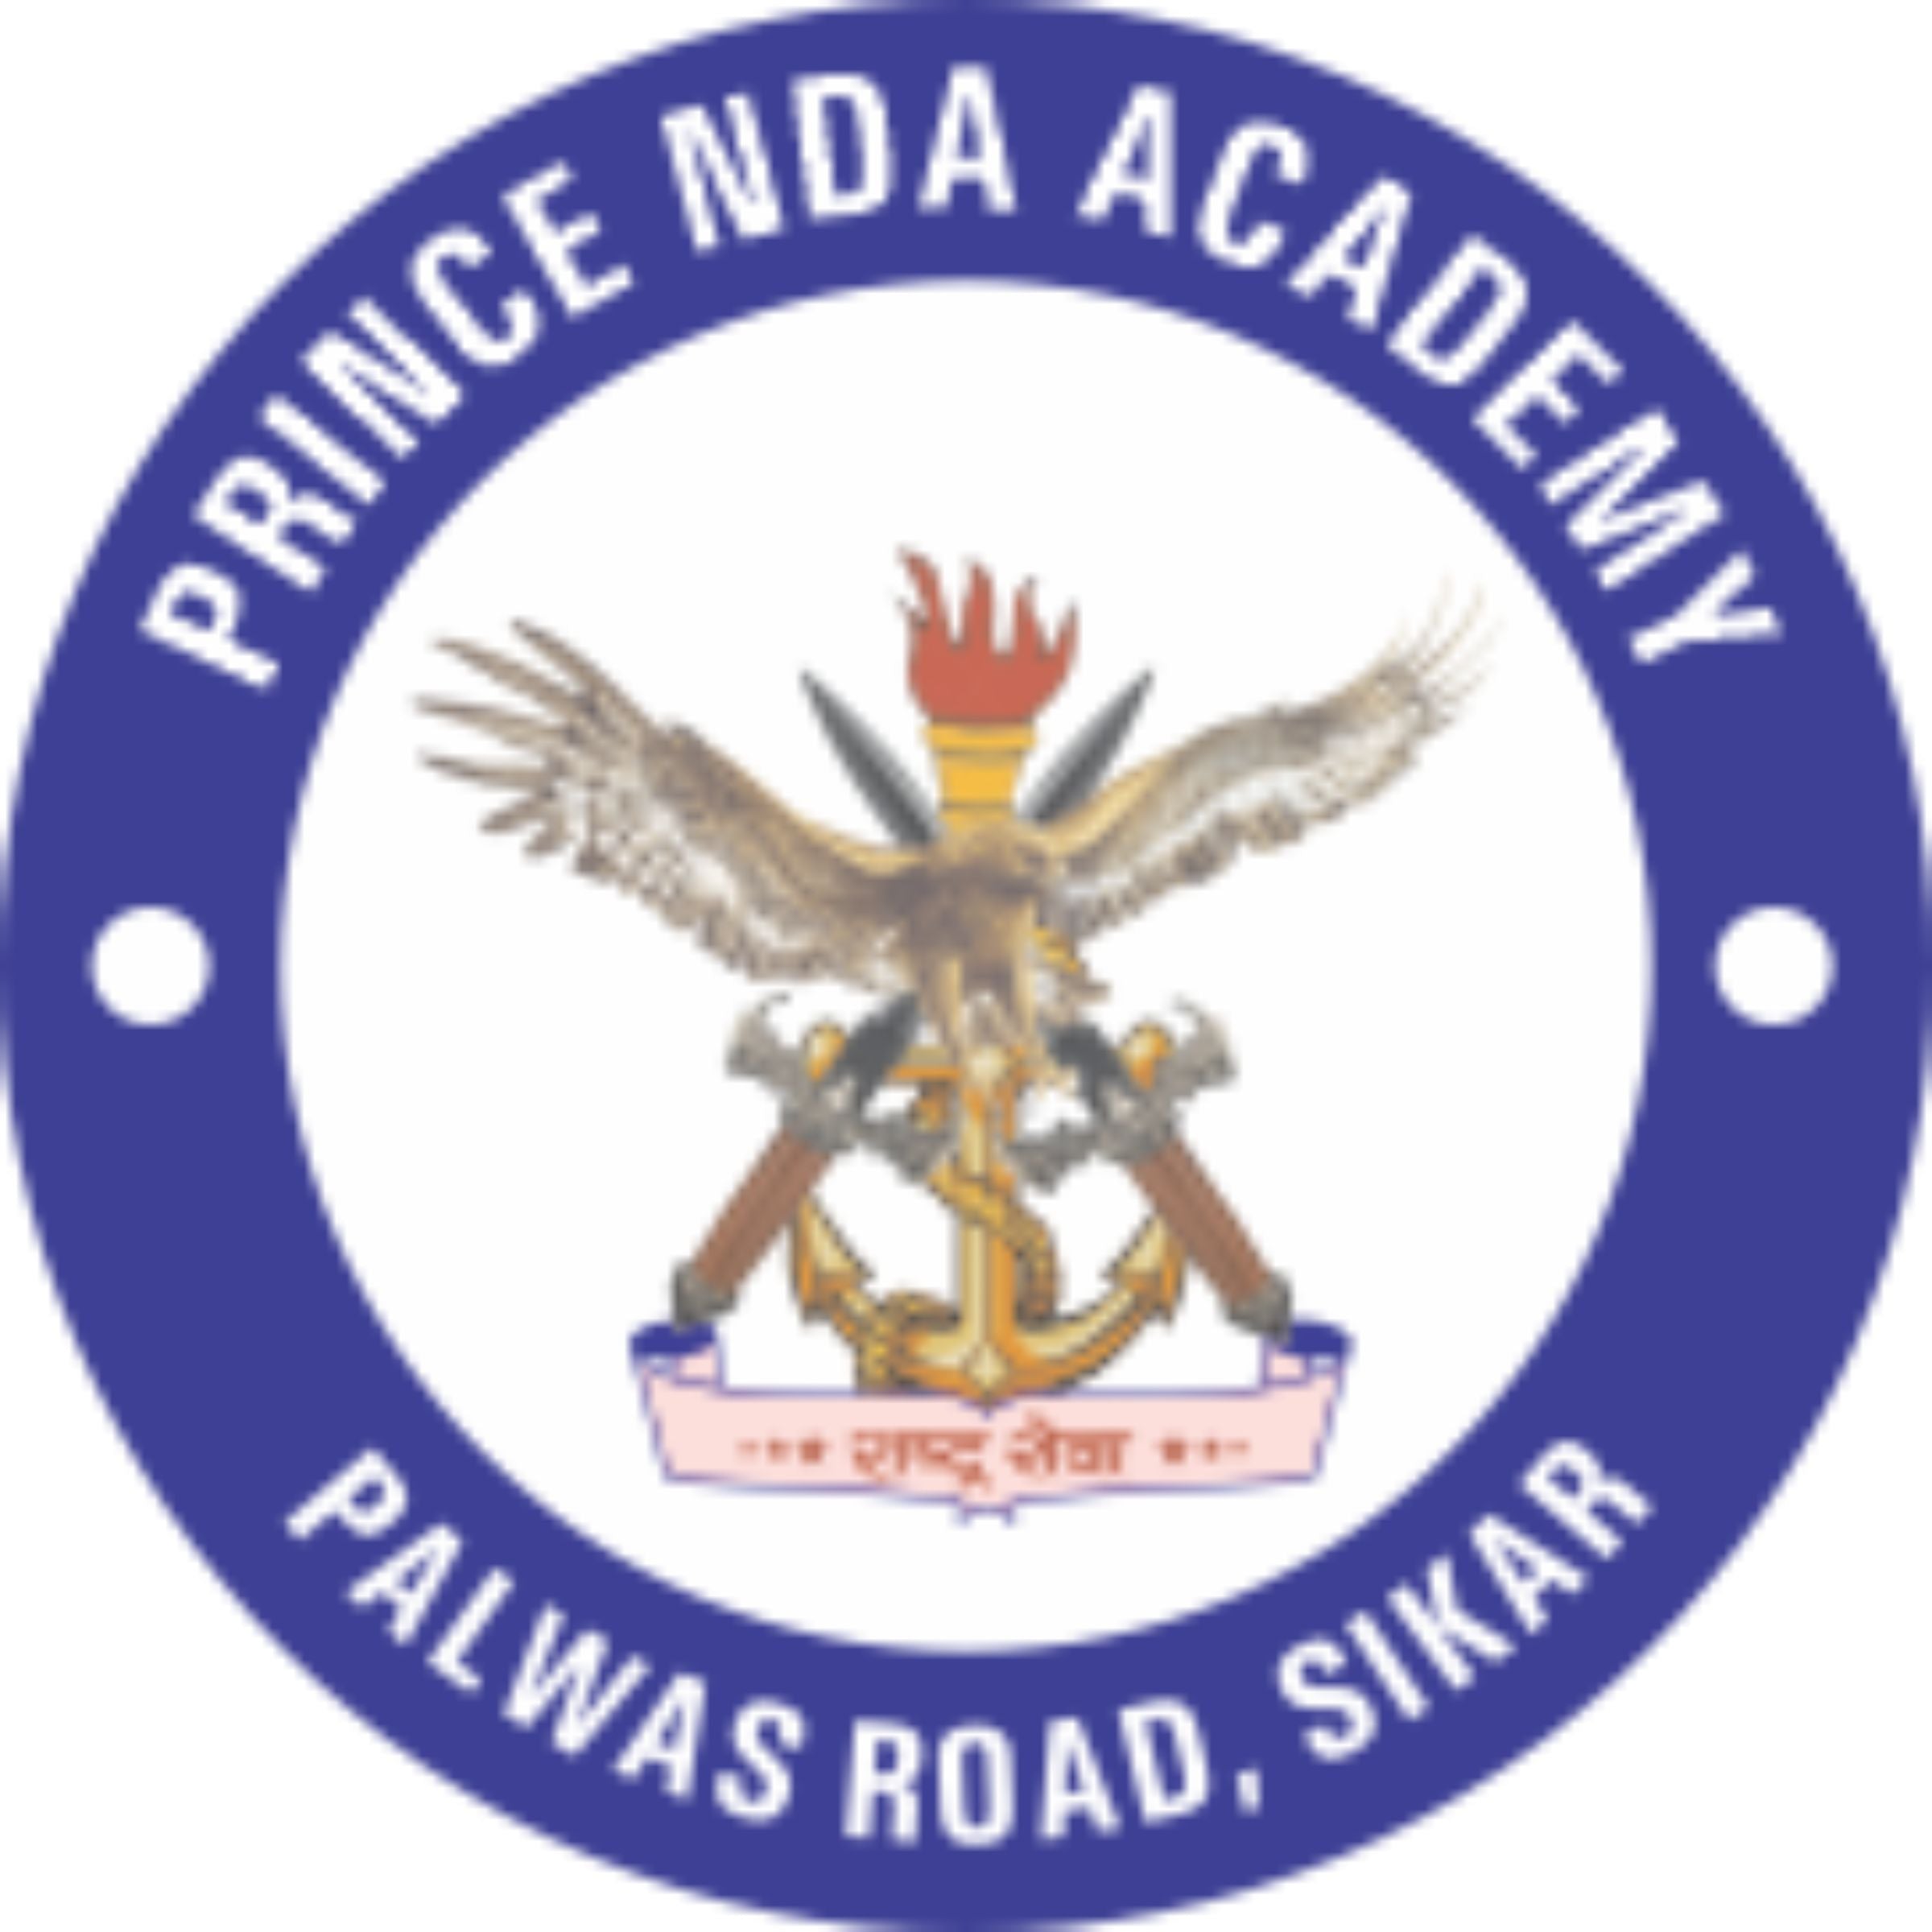 Prince NDA academy logo